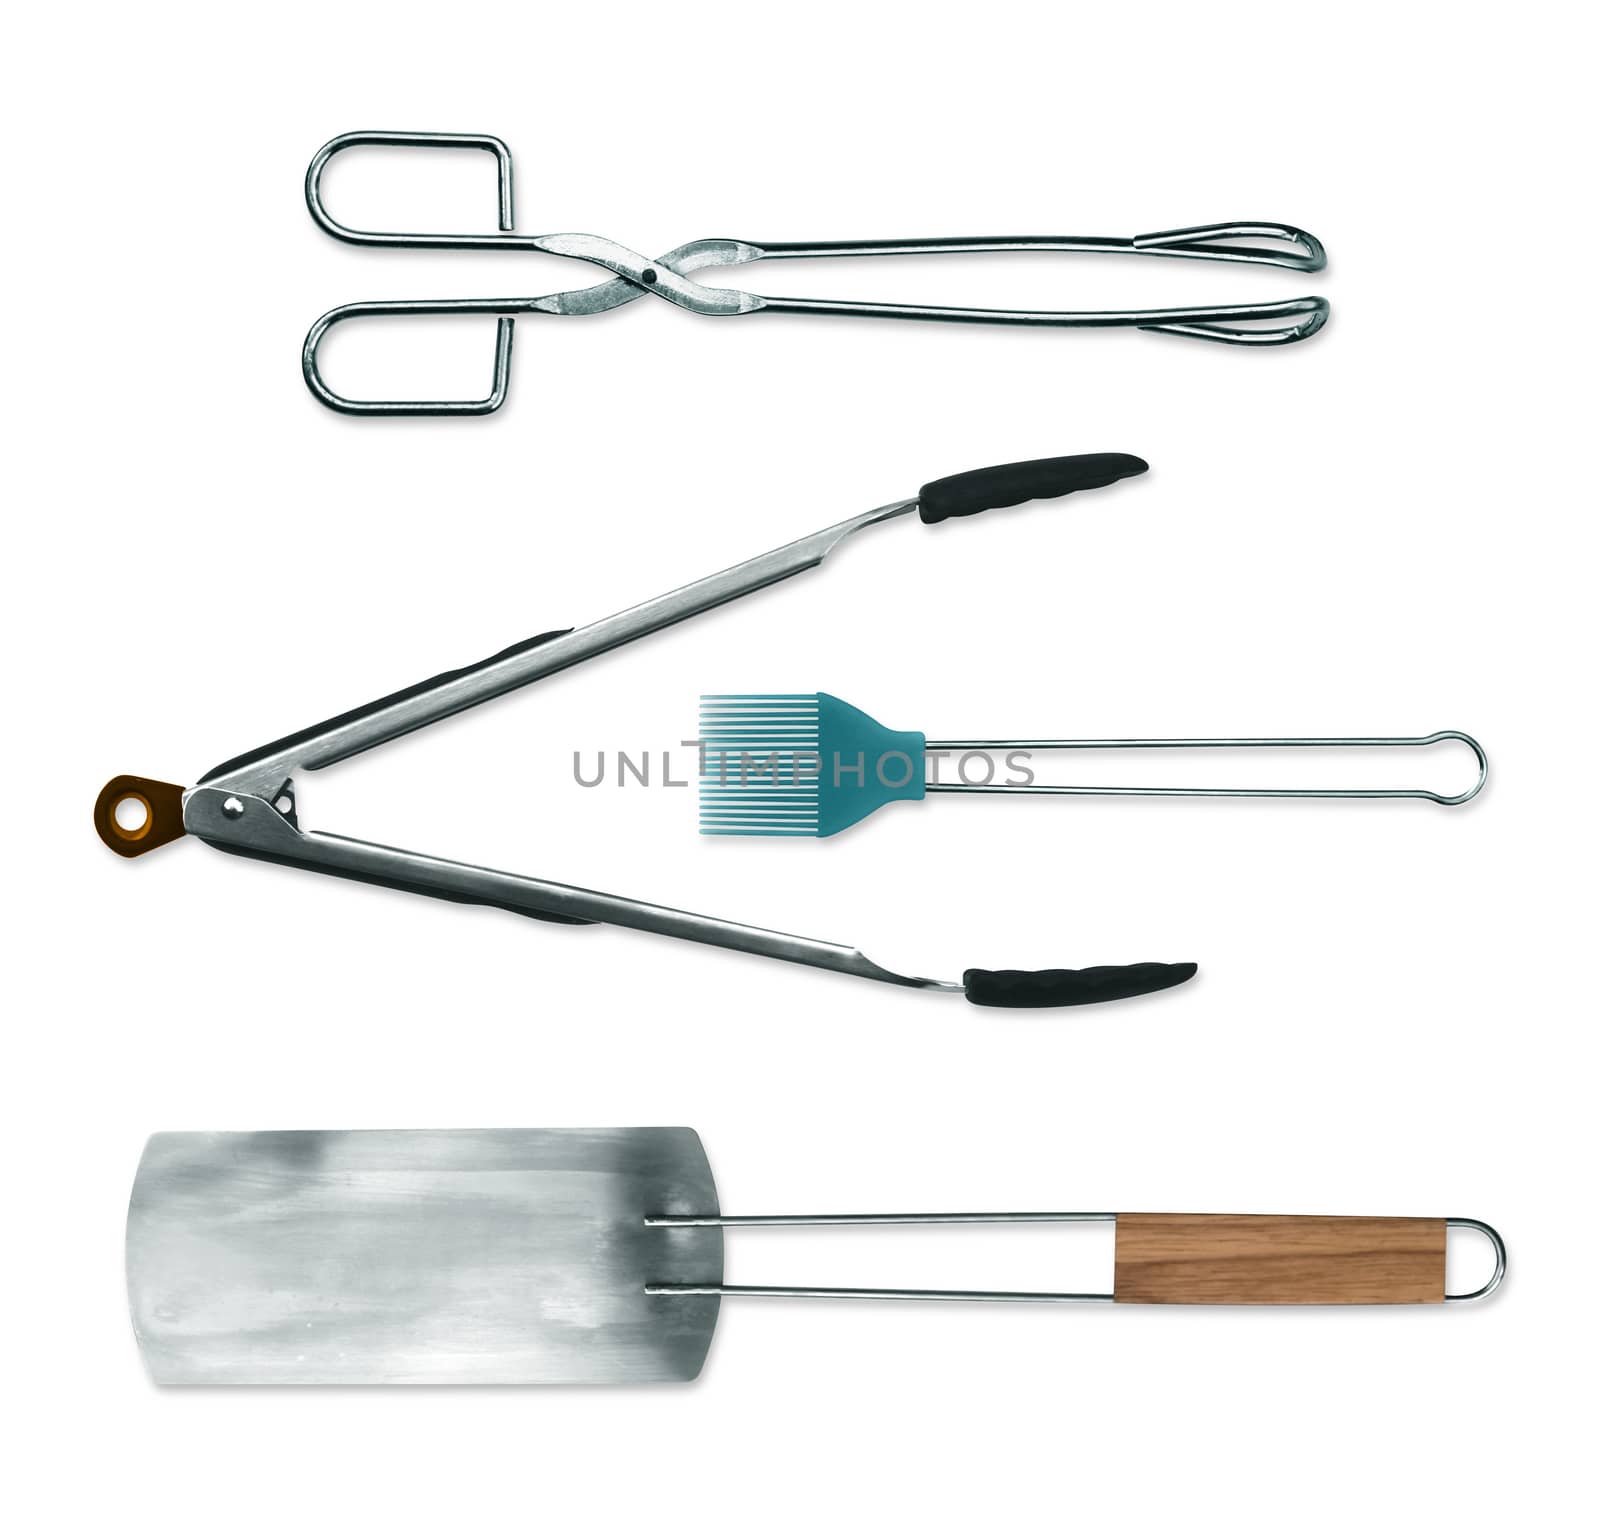 Barbecue tools set by anterovium